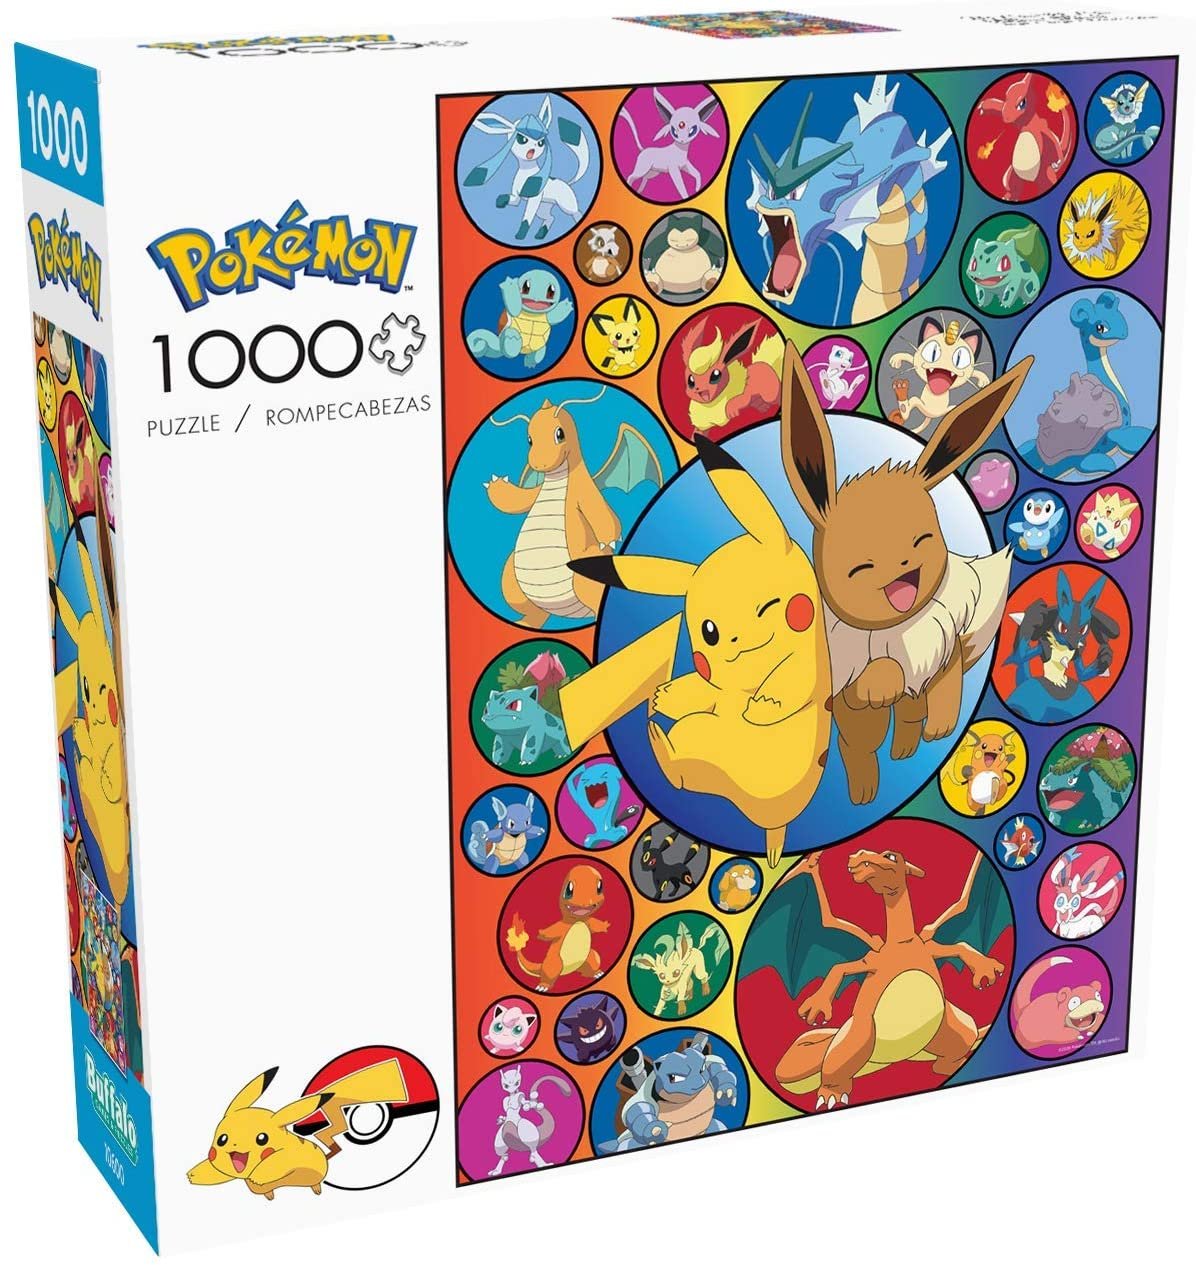 Wario64 on X: Pokemon - Pokemon Bubbles - 1000 Piece Jigsaw Puzzle is  $7.69 on   #ad  / X